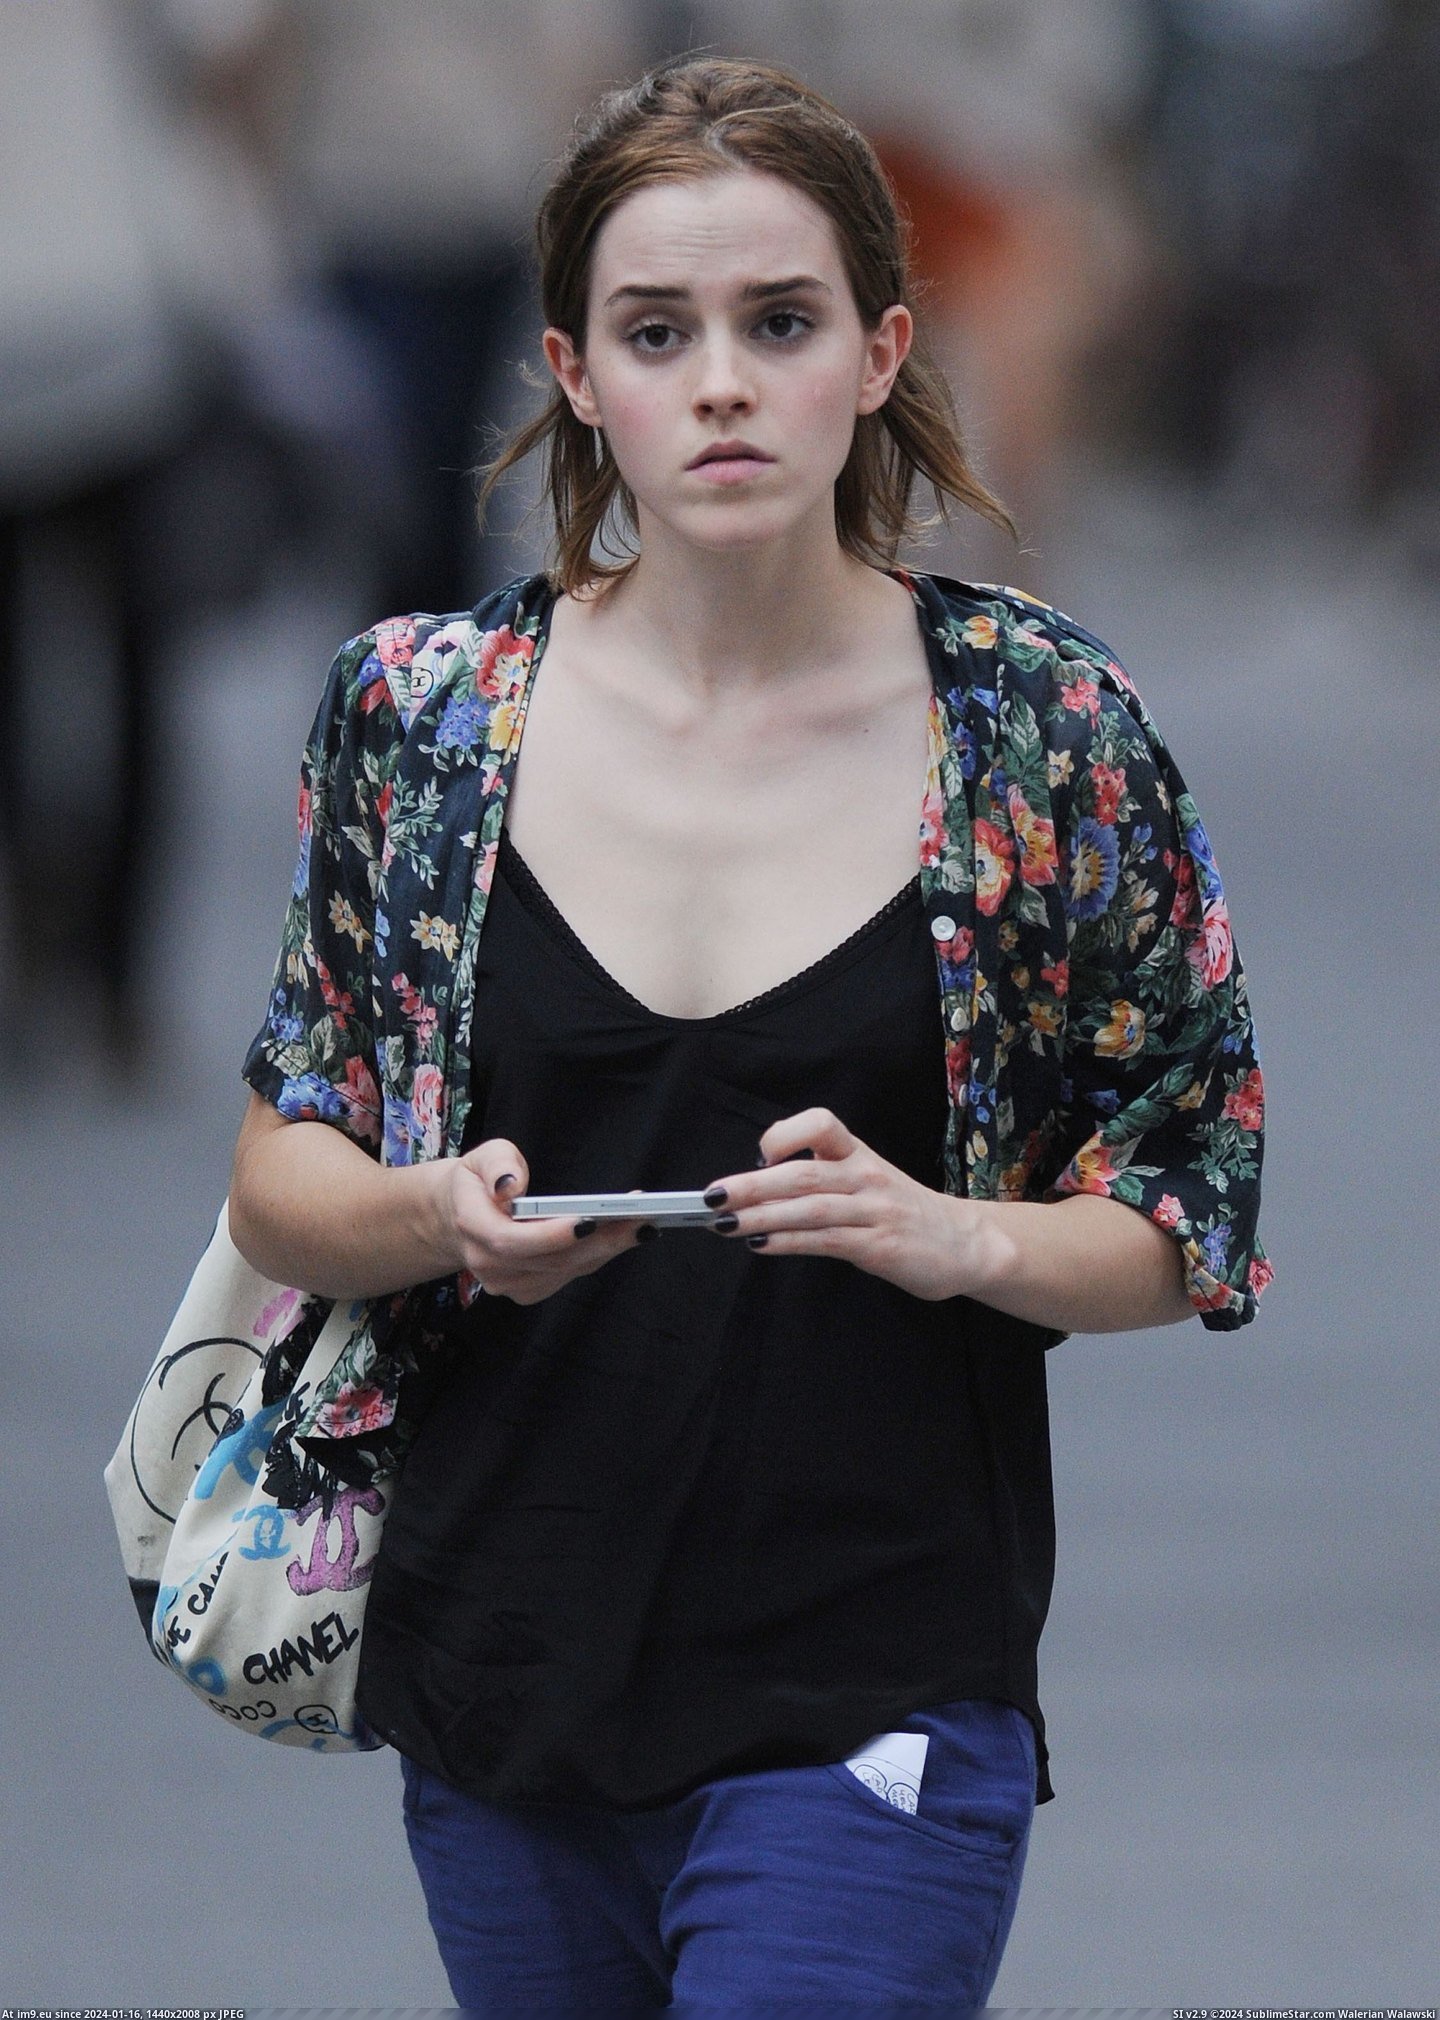 #Photo #New #Out #York #Xfktuva #Emma #Watson #City Emma Watson Out And About In New York City July 26 2012 Xfktuva (emma photo) Pic. (Image of album Emma Watson Photos))